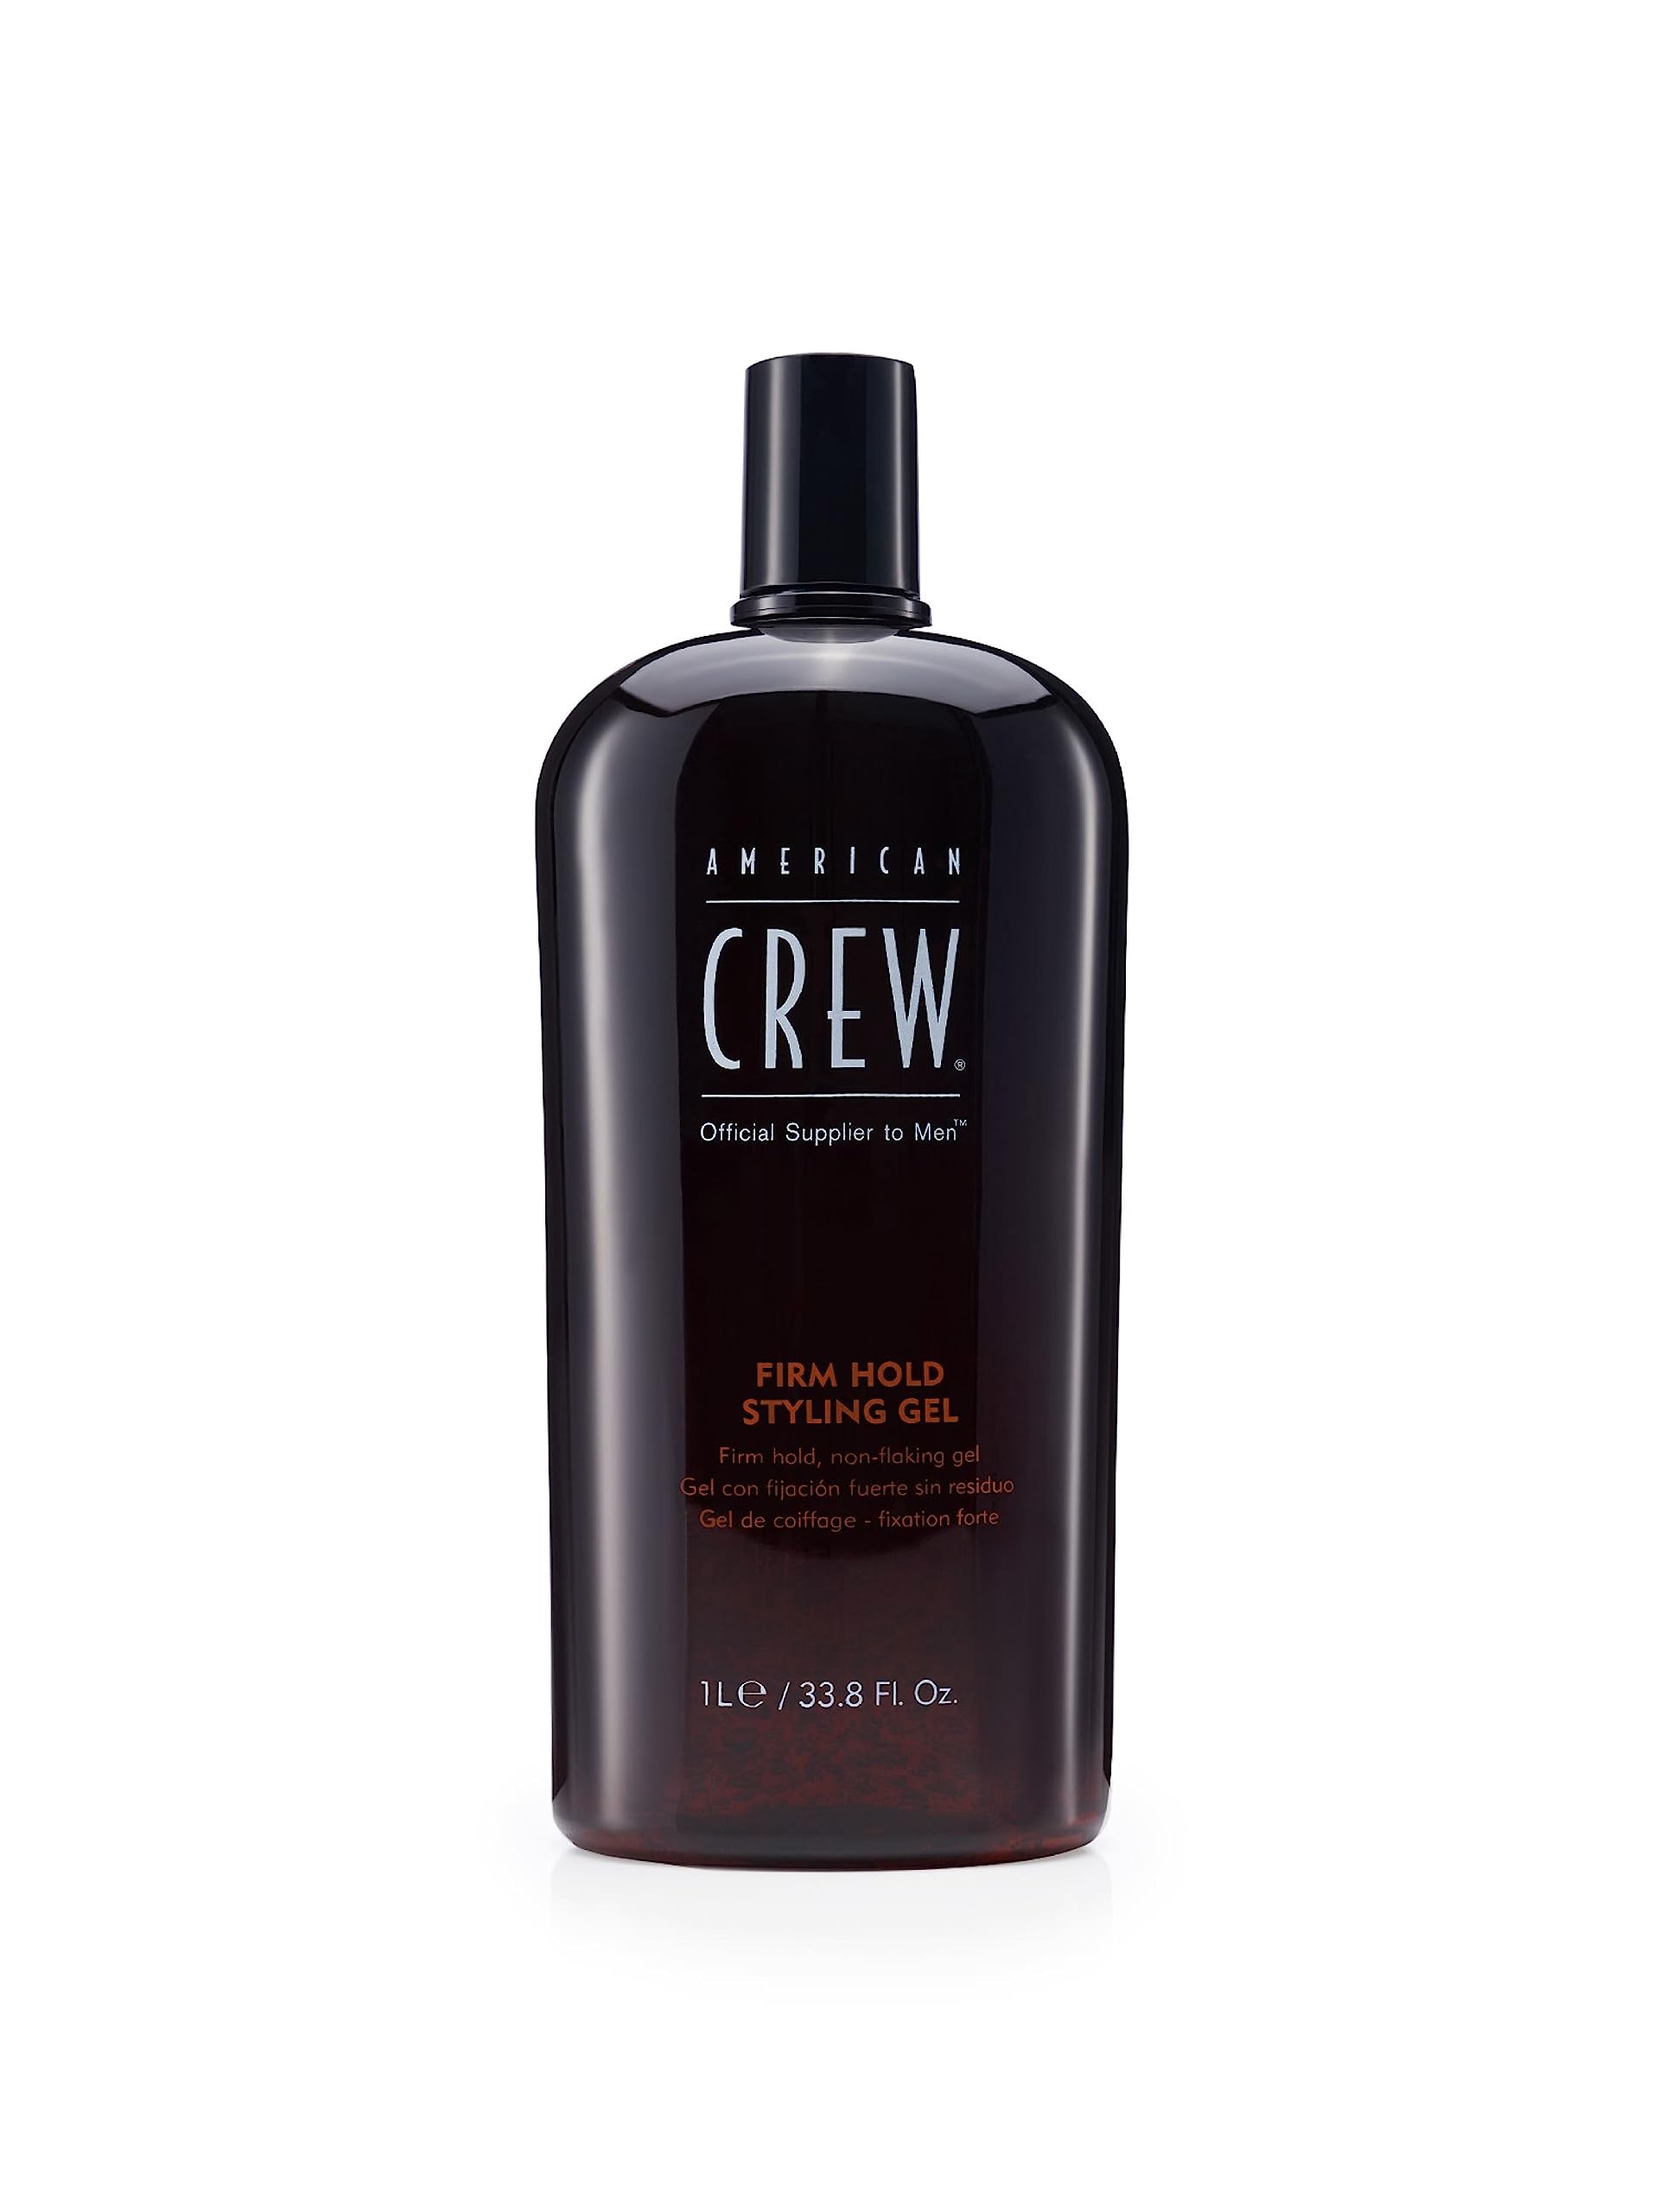 American Crew Men's Hair Gel, Firm Hold, Non-Flaking Styling Gel, 33.8 Fl Oz